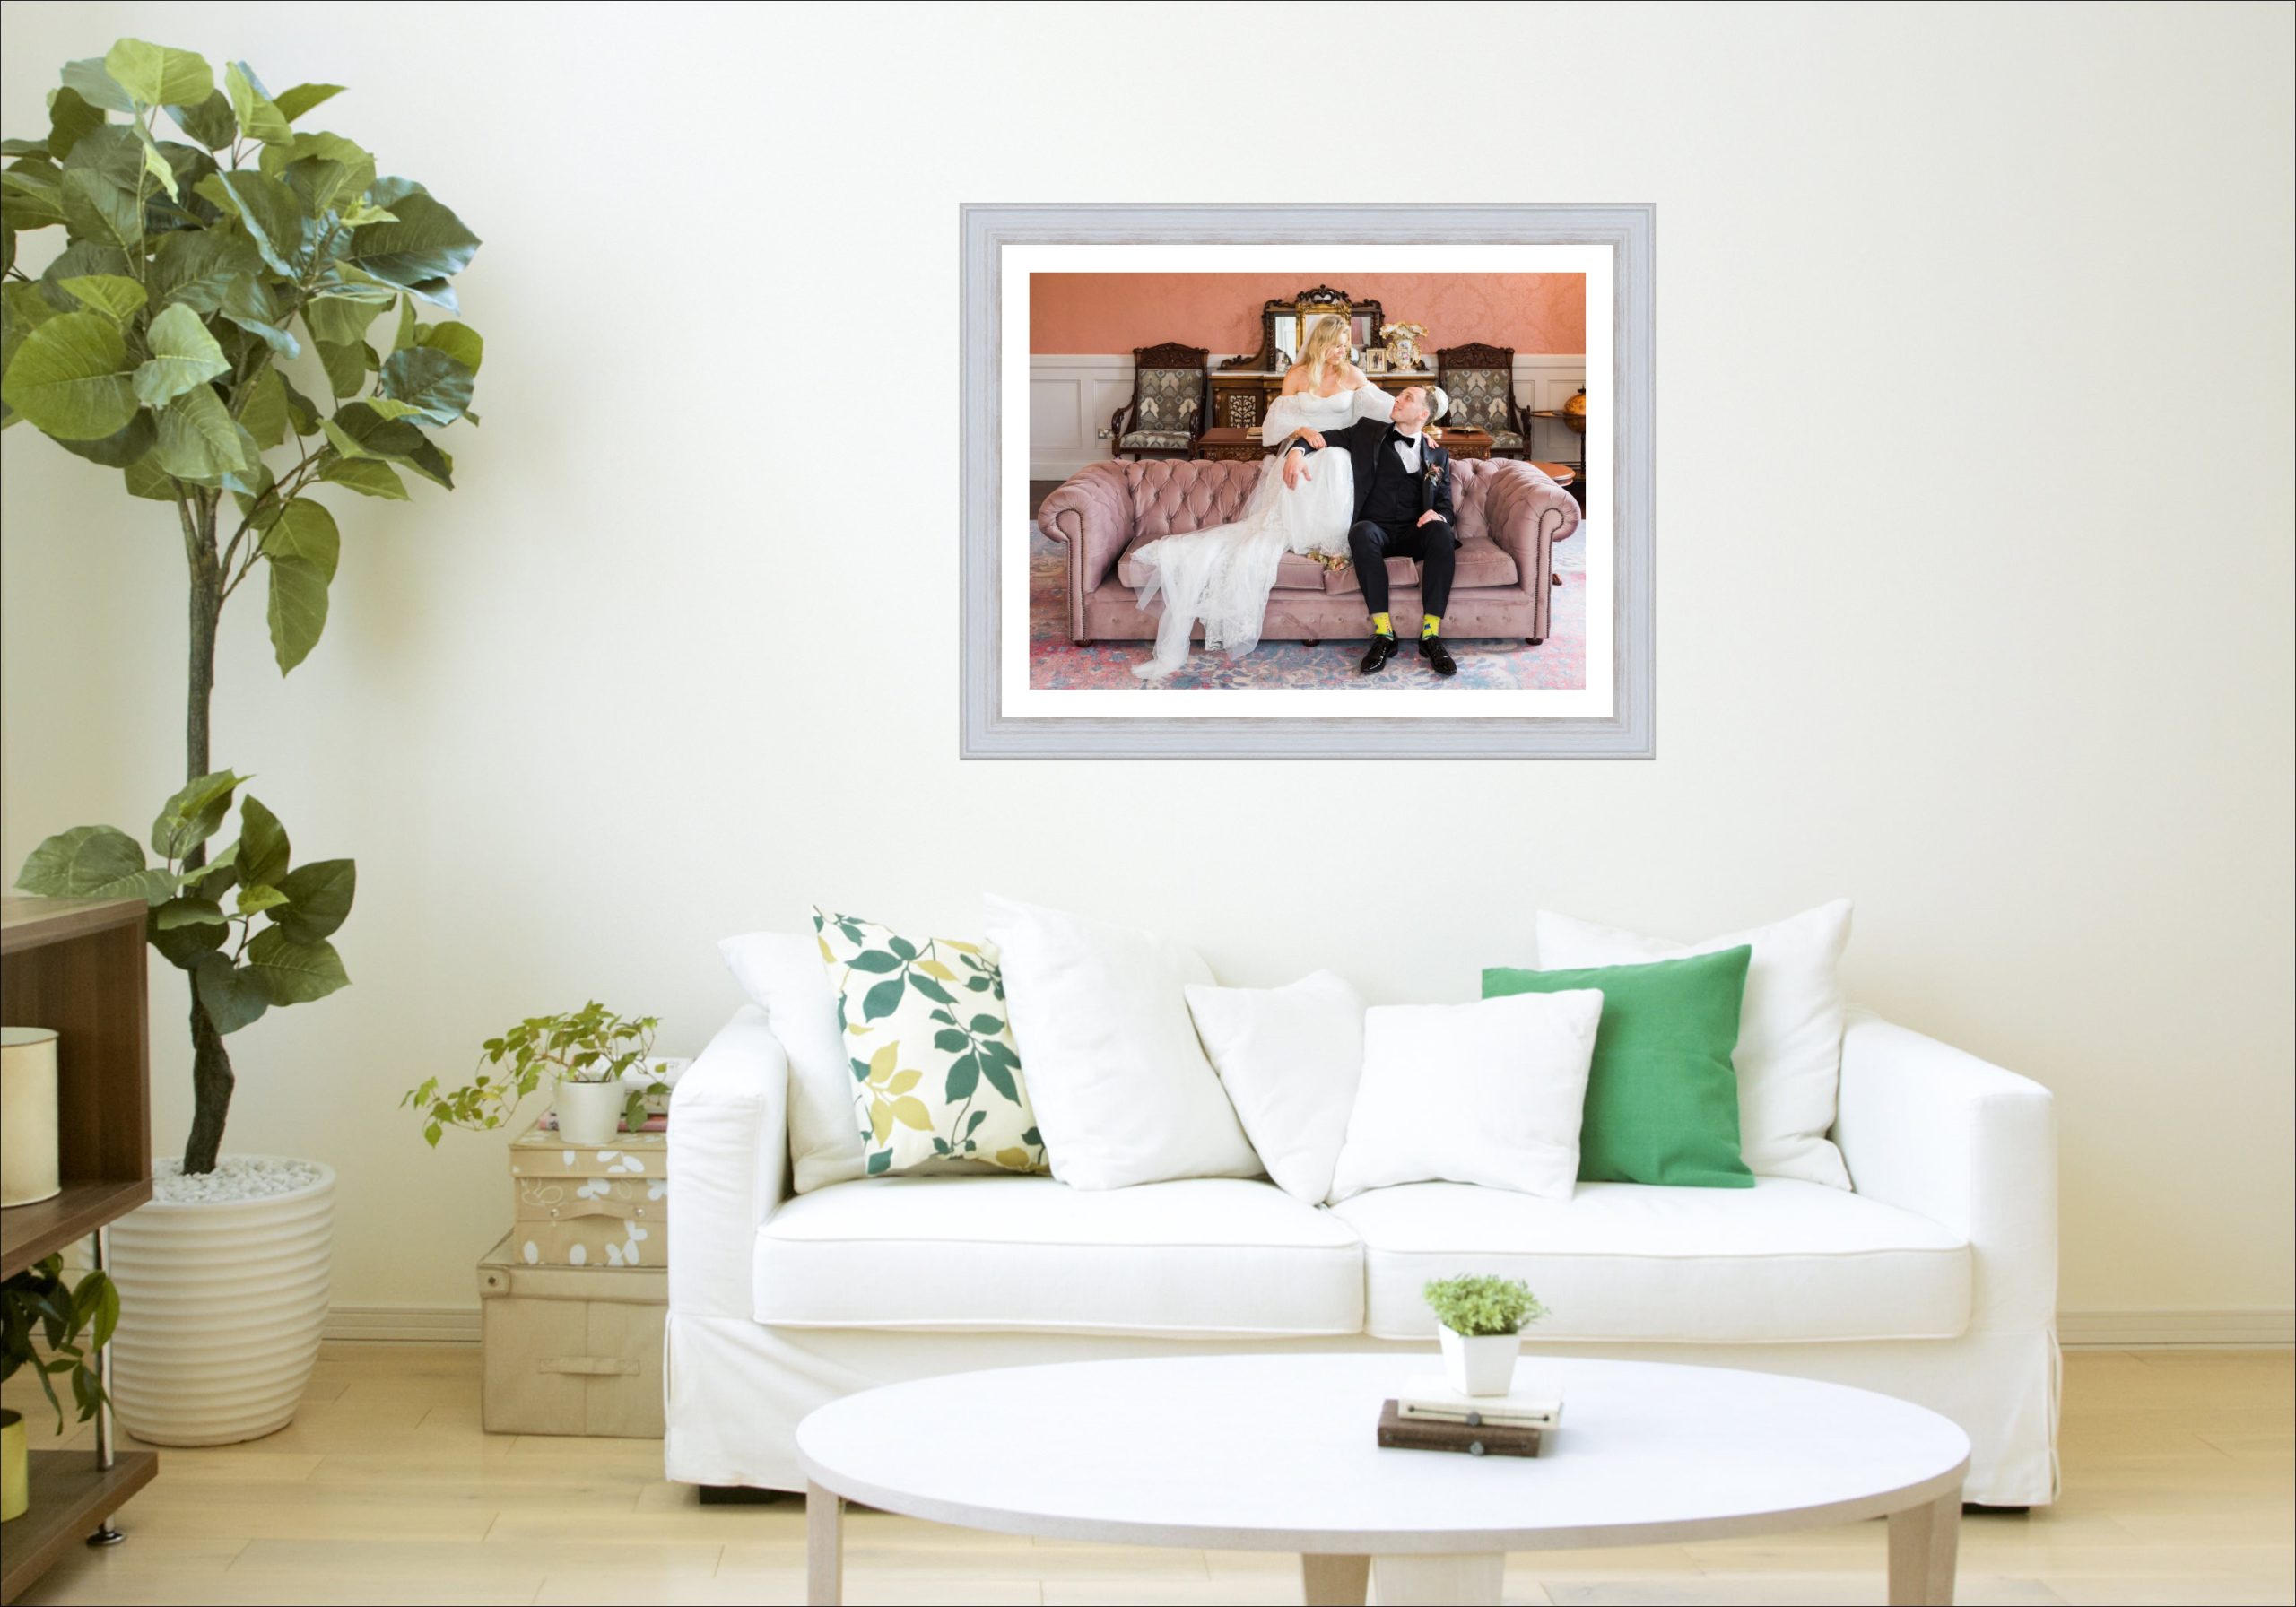 Framed wedding photo in a living room